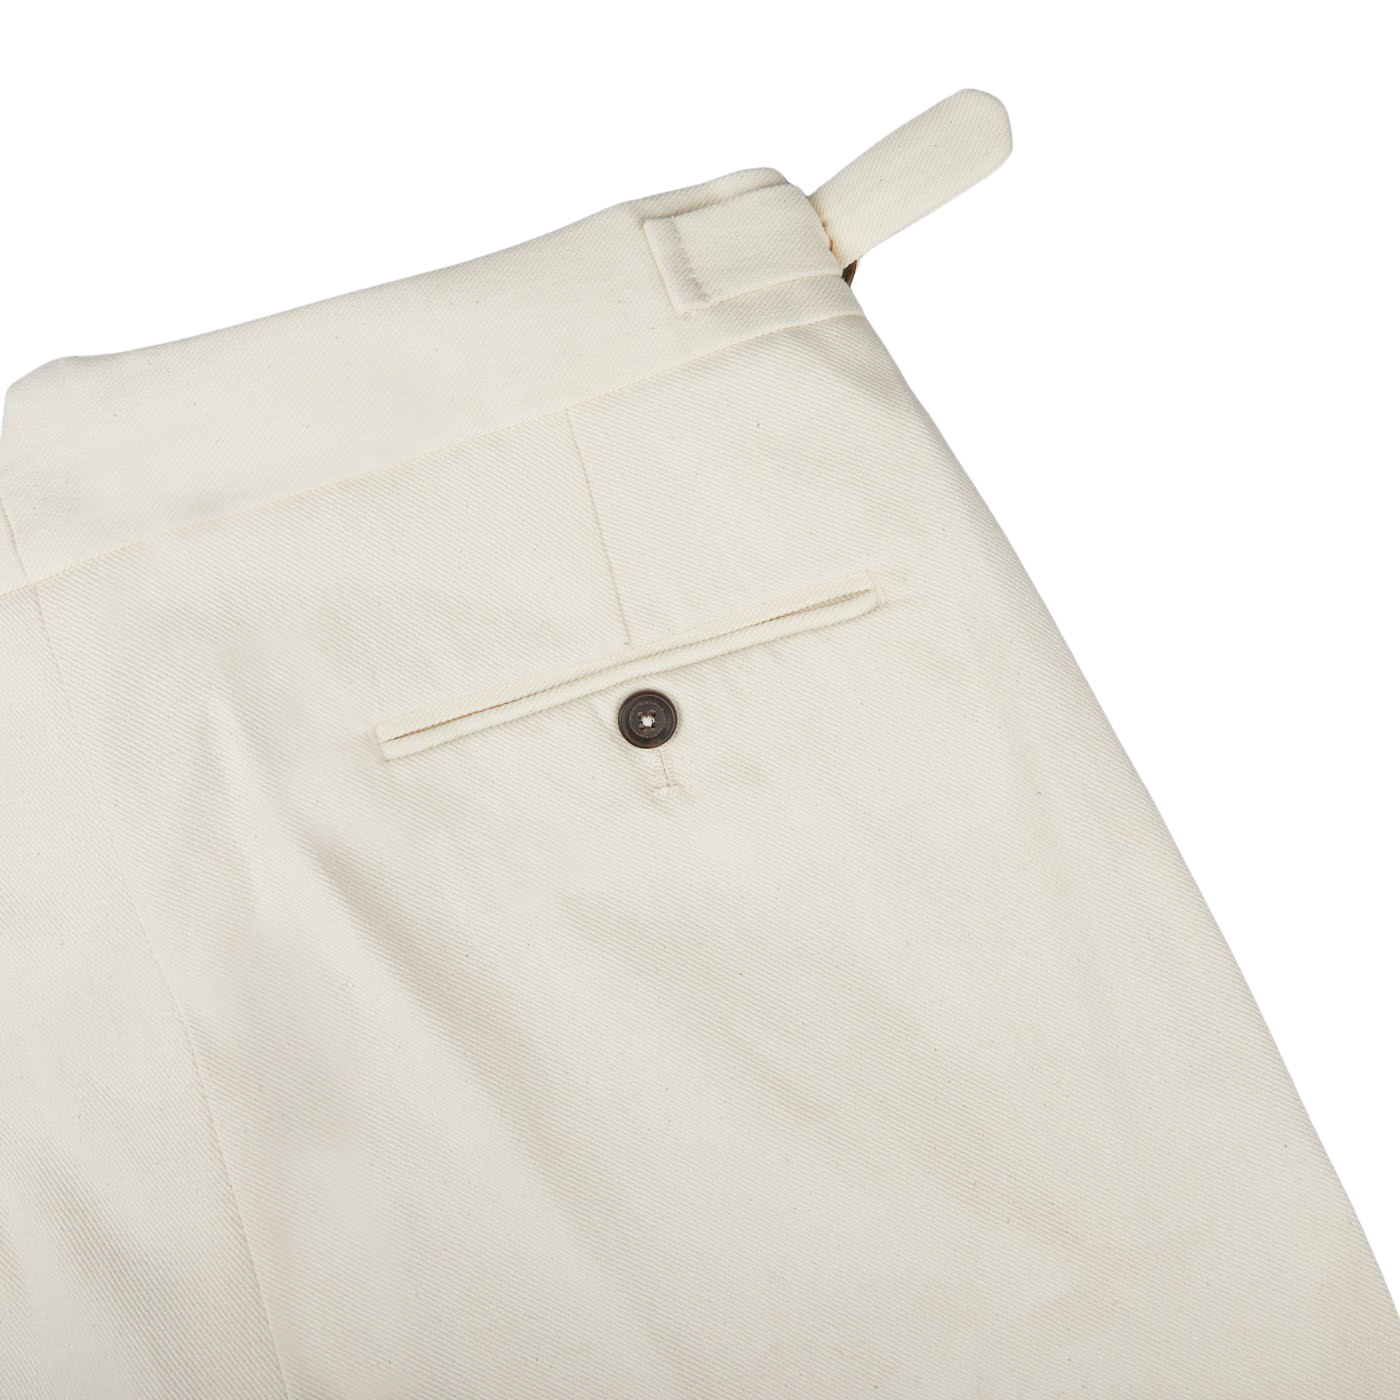 Grand Le Mar  White Linen Gurkha Trousers Casual Comfort with Linen  Sophistication.